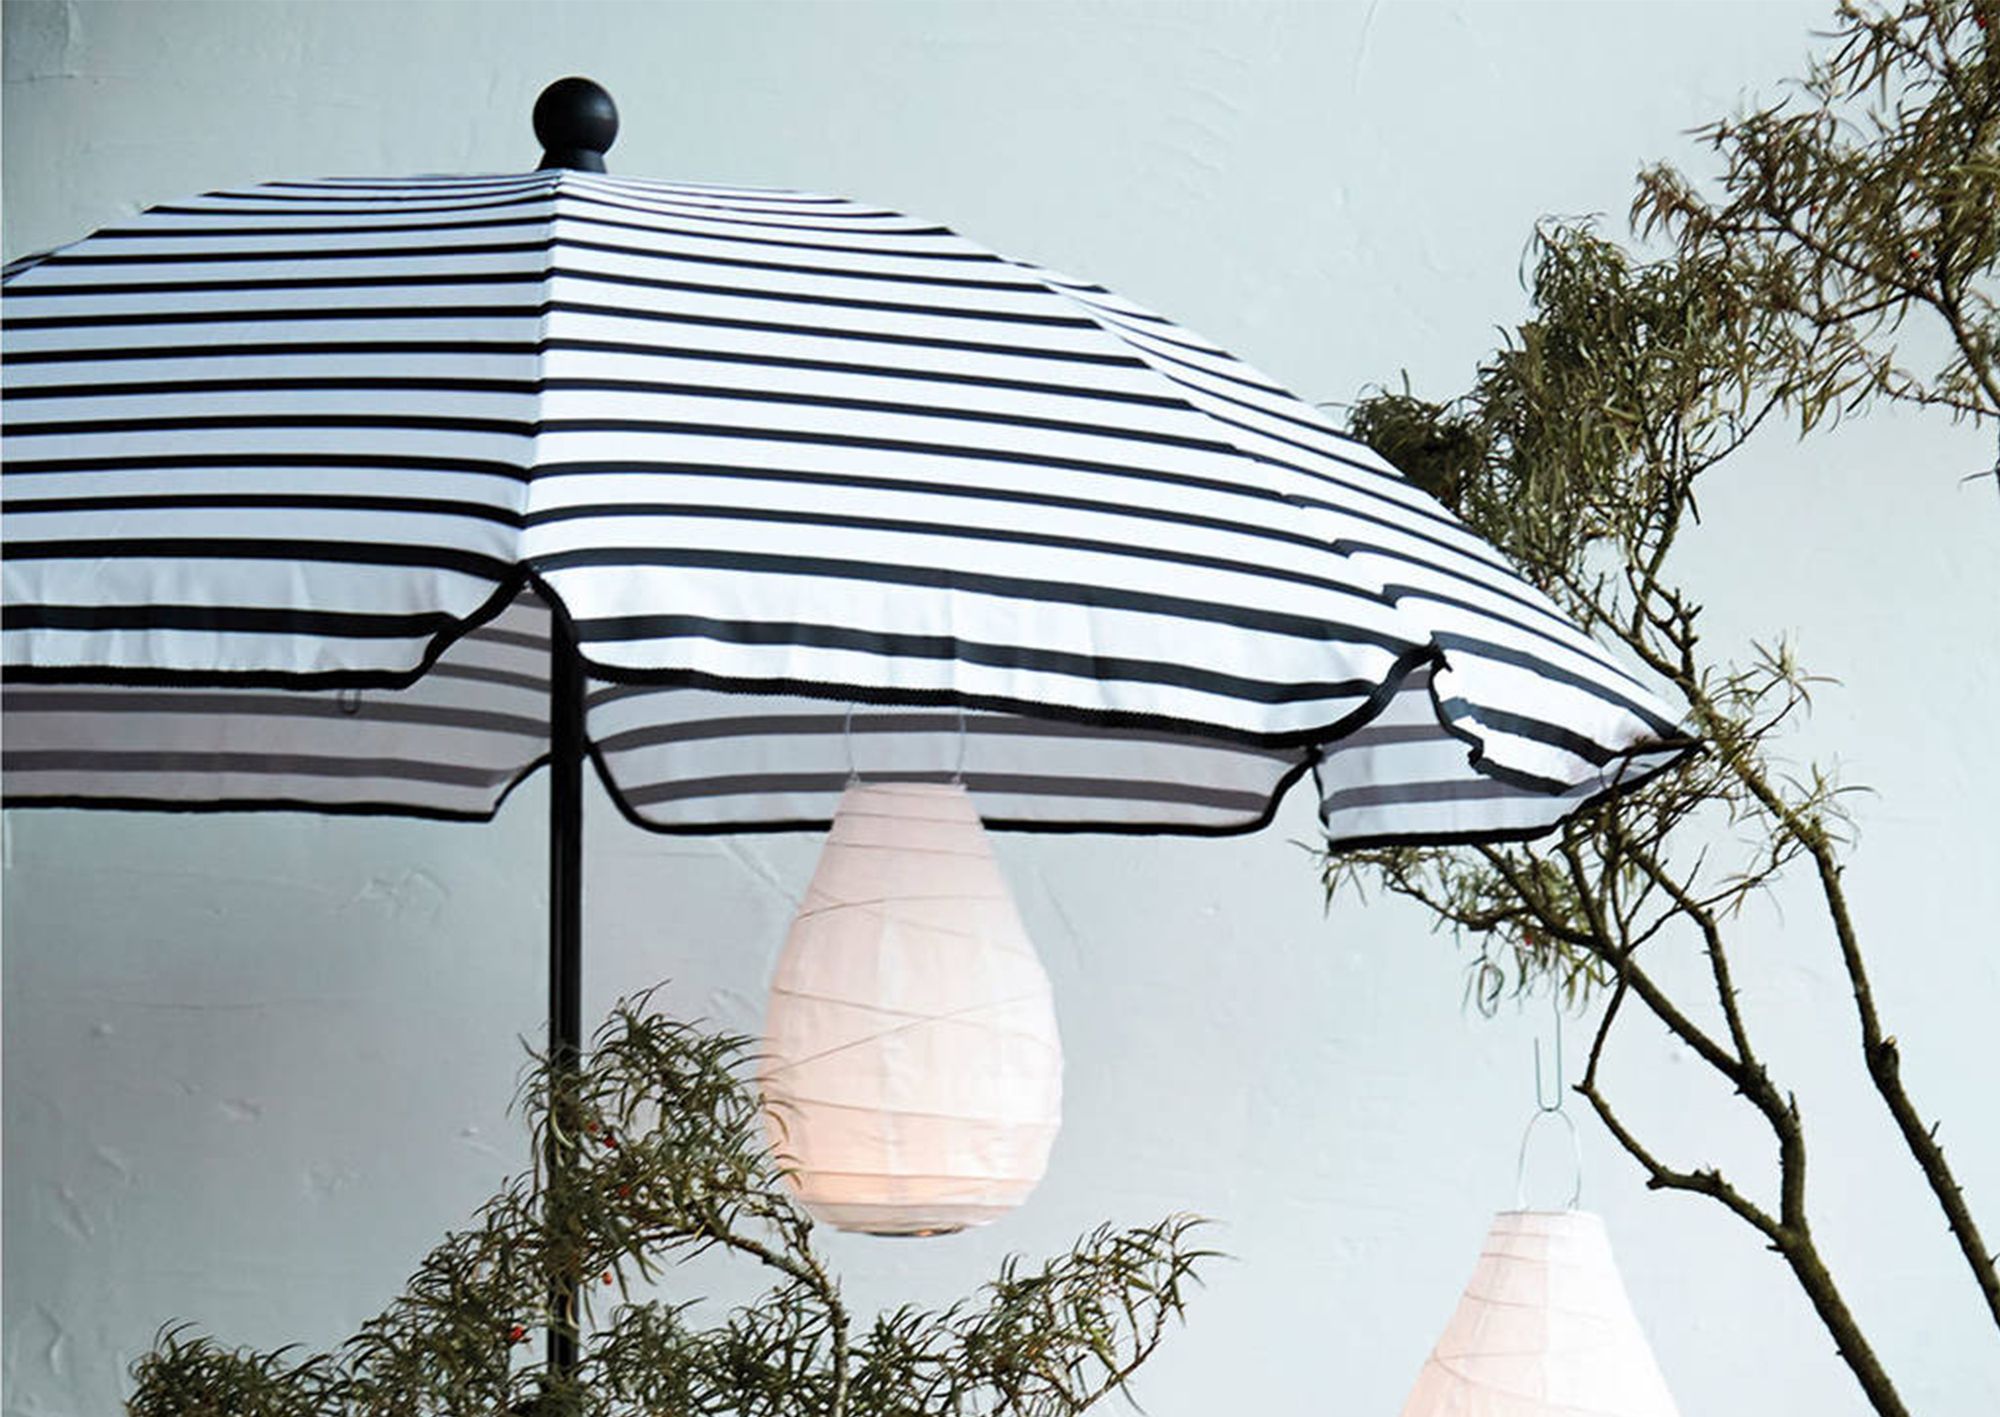 maandelijks boekje Picasso Lidl's sail shaped parasol with LED lights arrives in stores